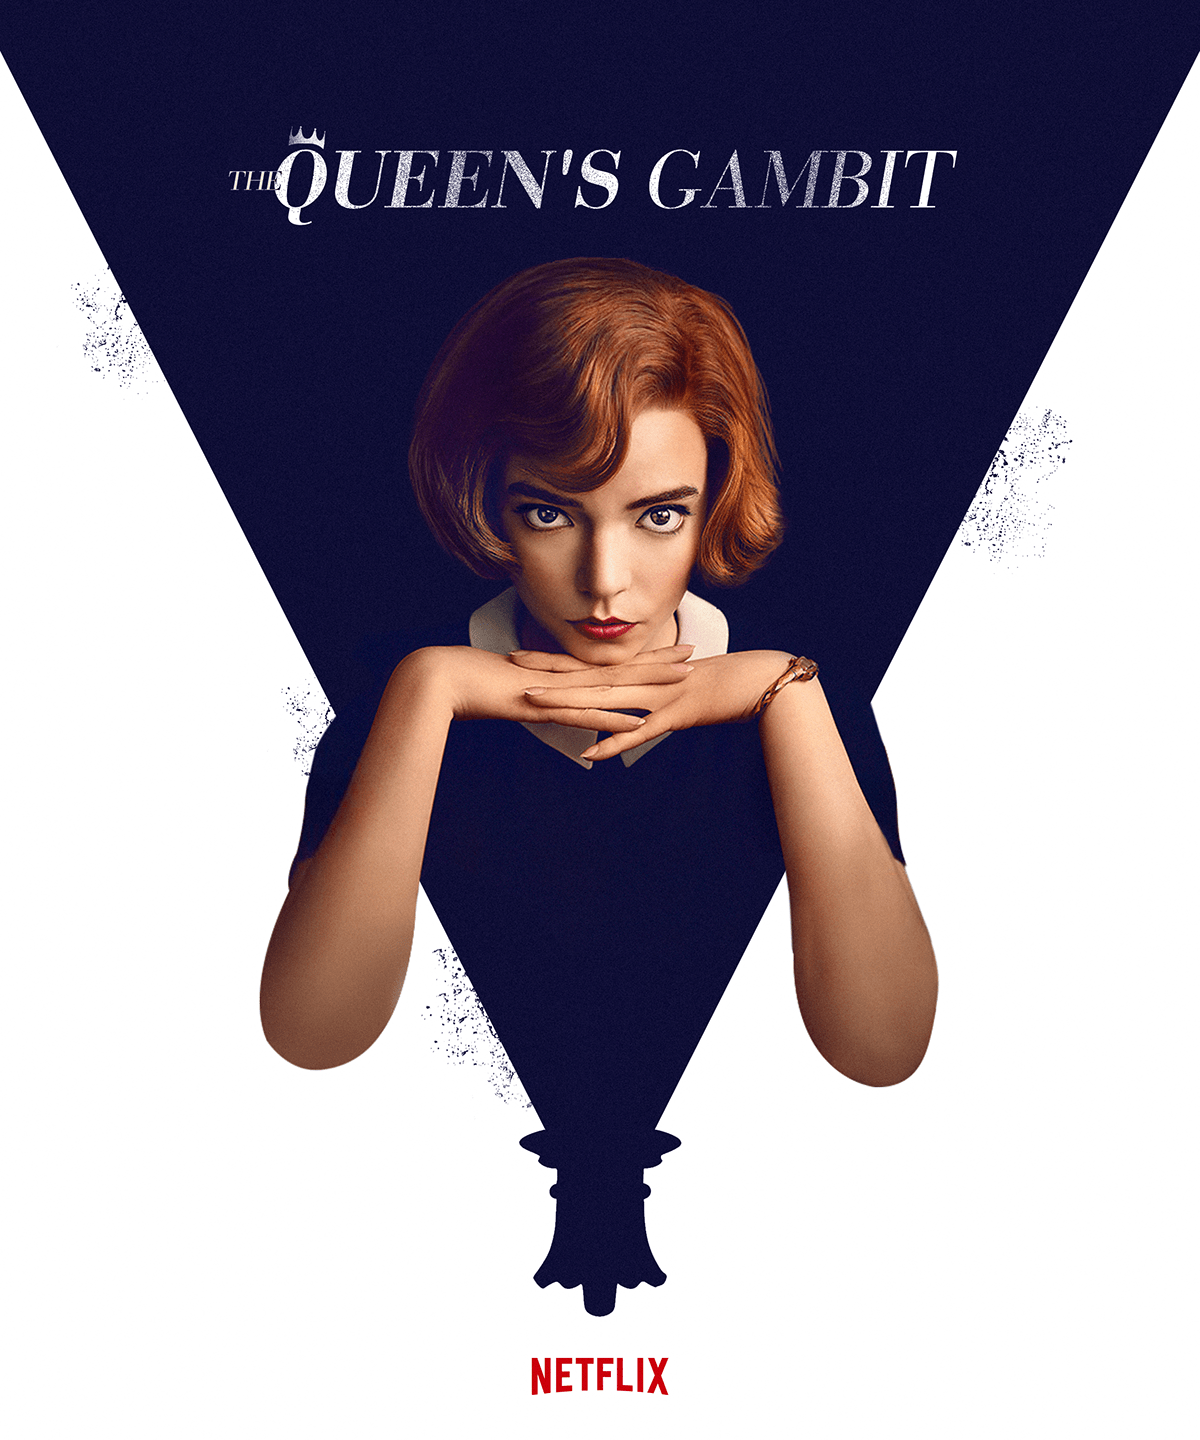 Anya Taylor-Joy Beth Harmon chess Netflix poster series The Queen's Gambit art tv series fanart